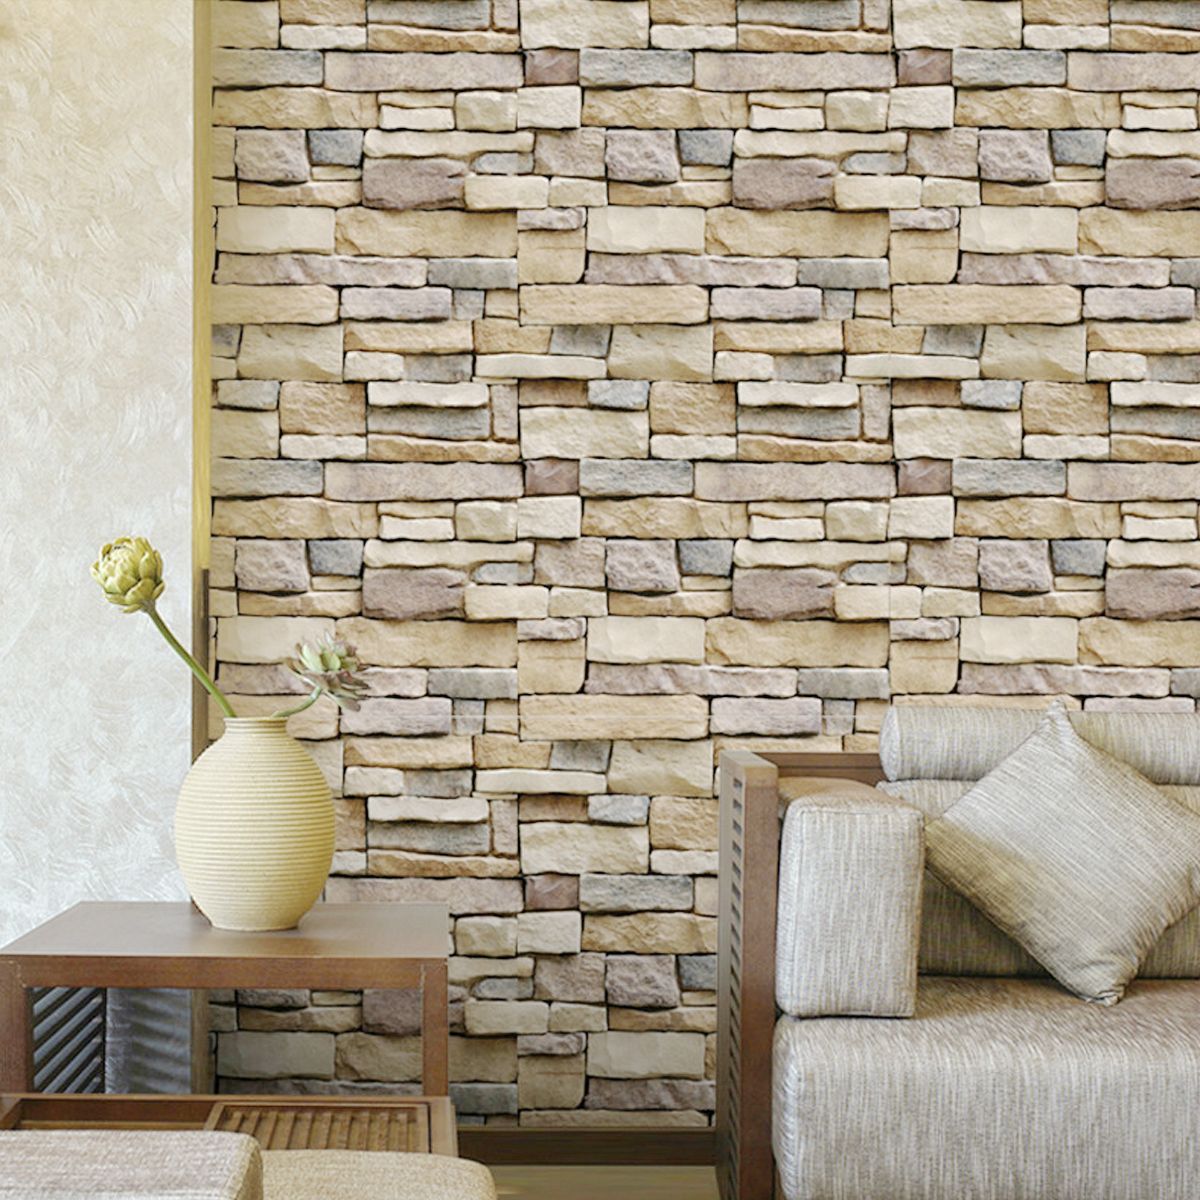 3D-Wall-Paper-Brick-Stone-Pattern-Sticker-Rolls-Self-adhesive-Backdrop-DIY-Room-Decor-1373594